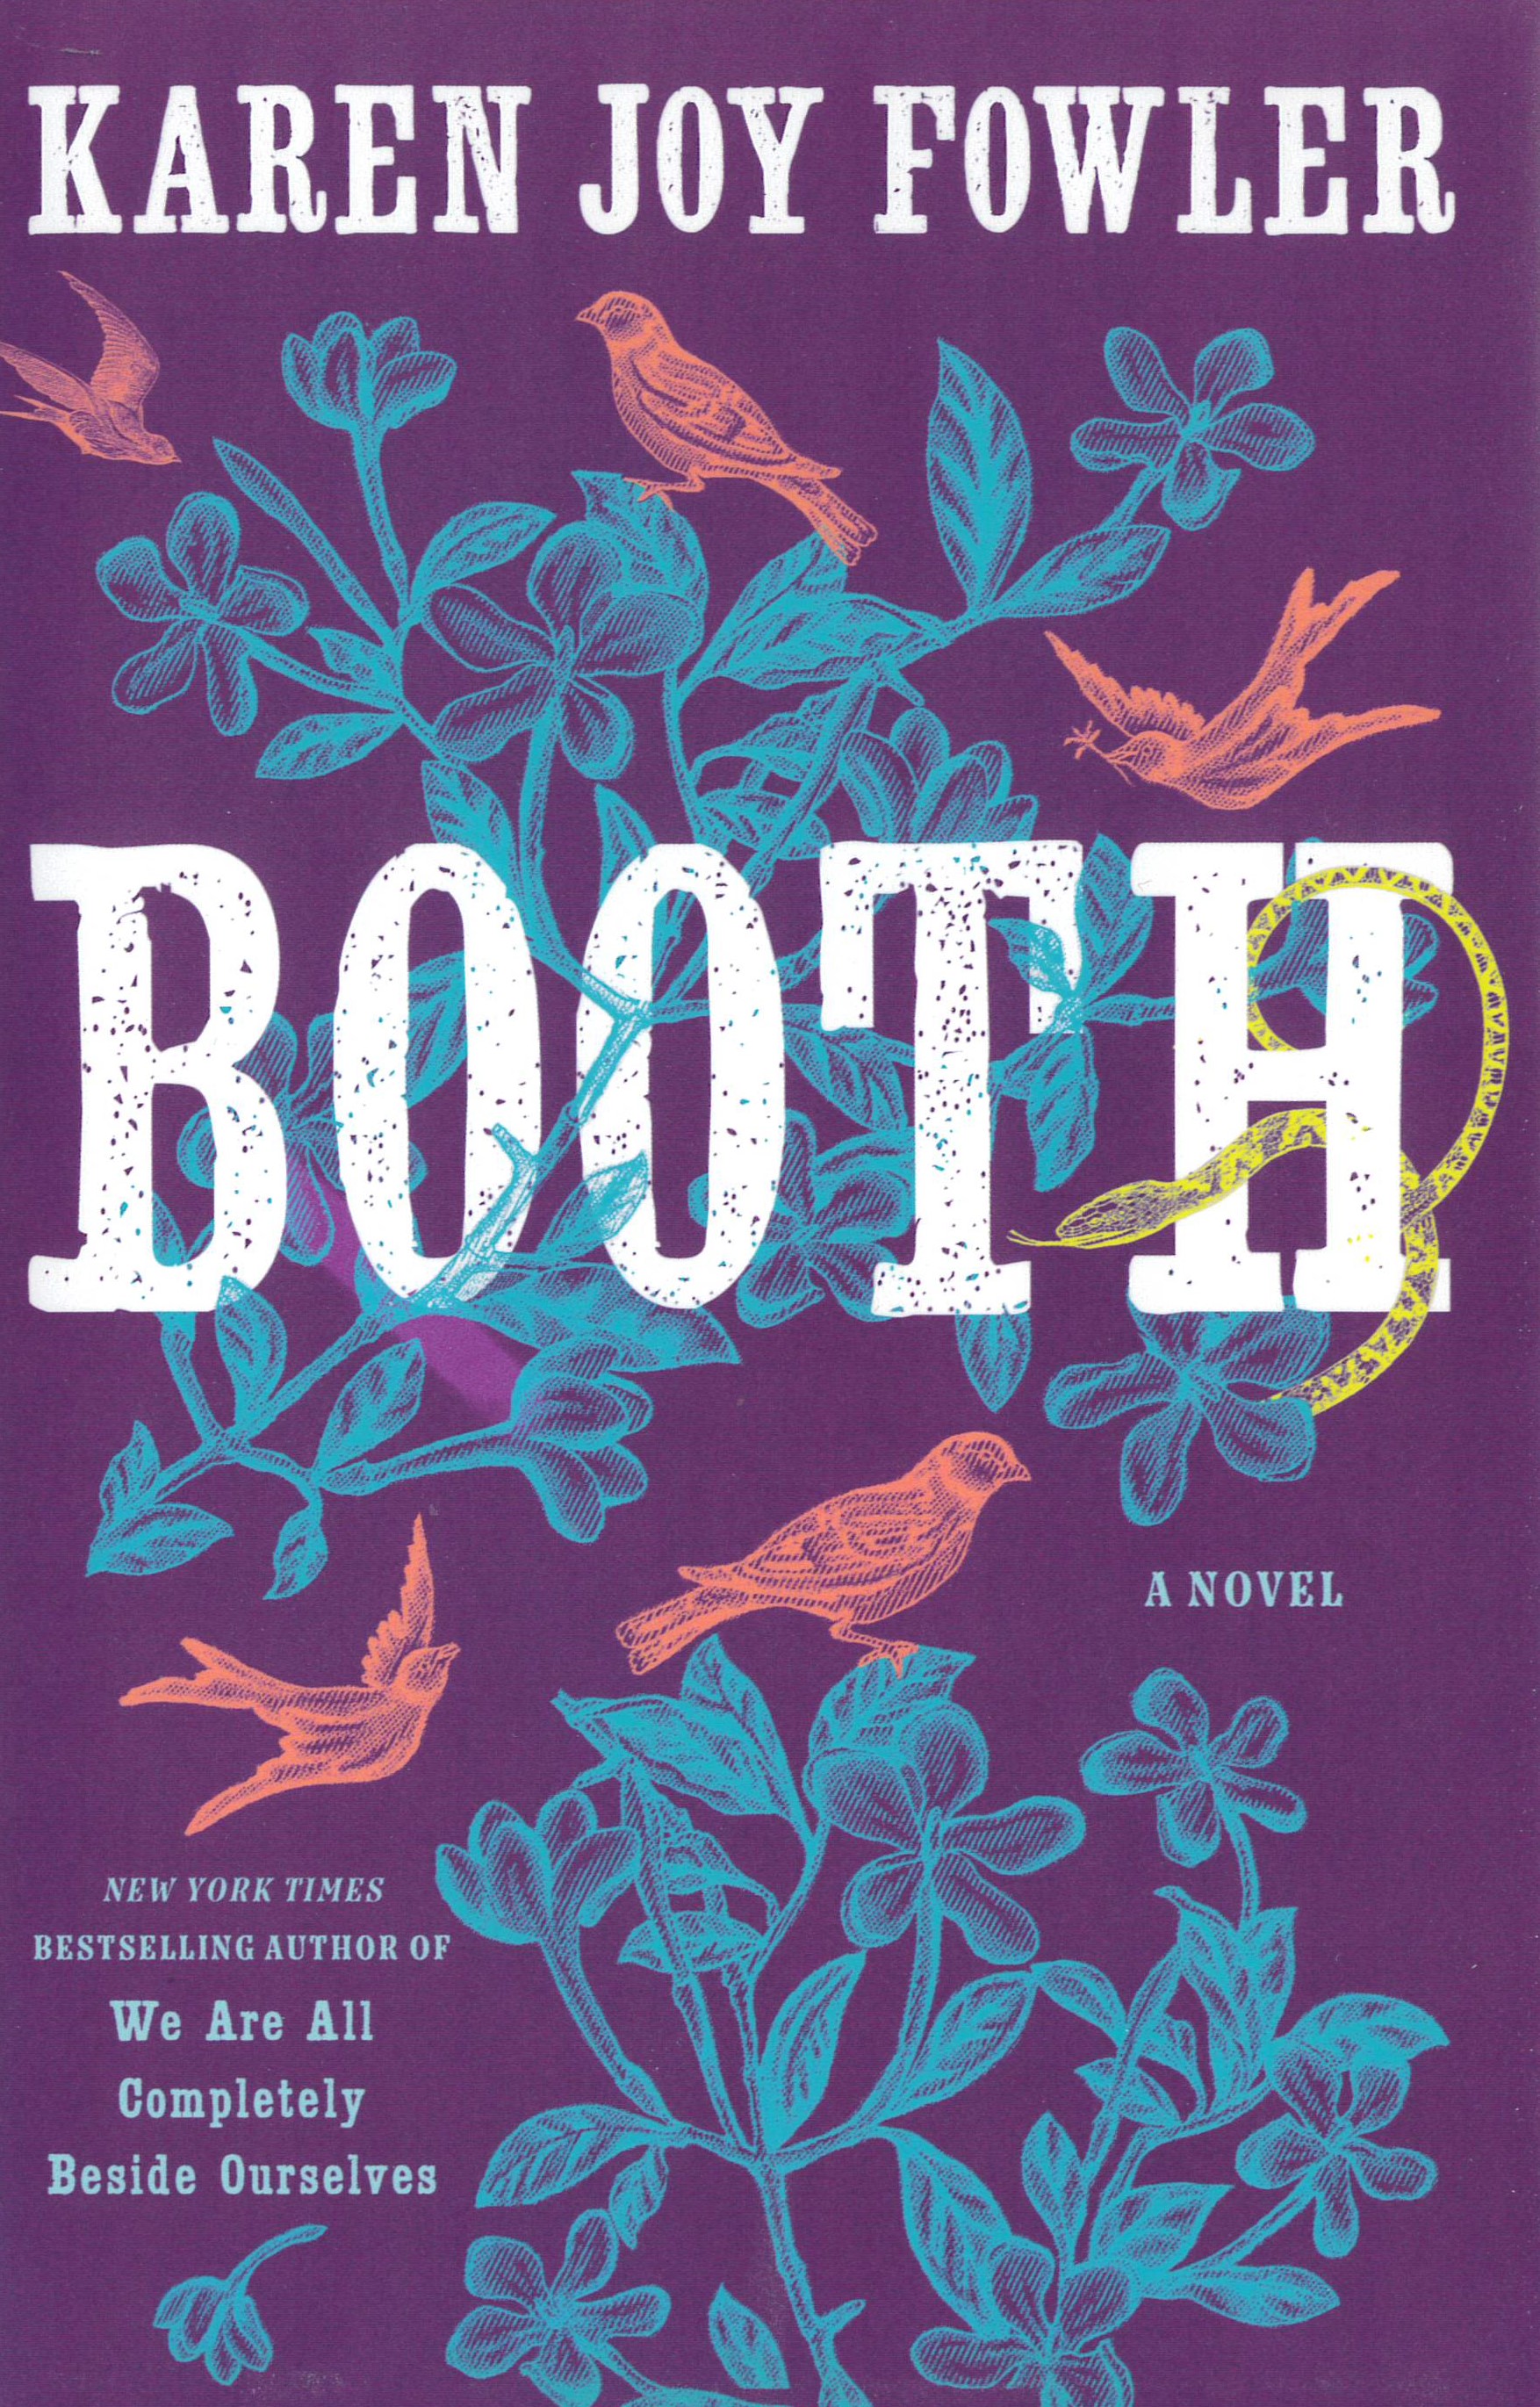 Booth : a novel /